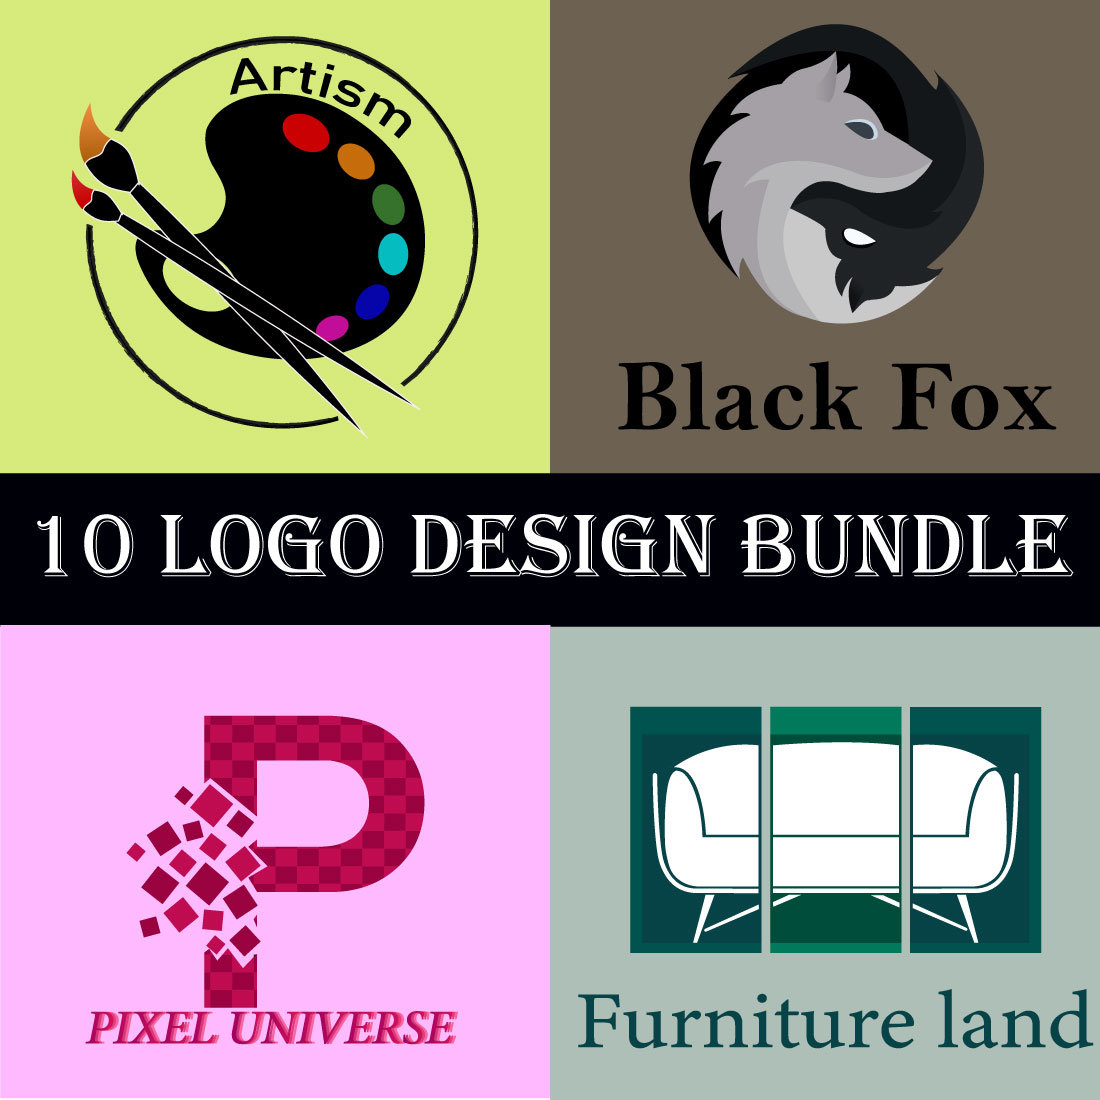 10 minimalist logo design bundle cover image.